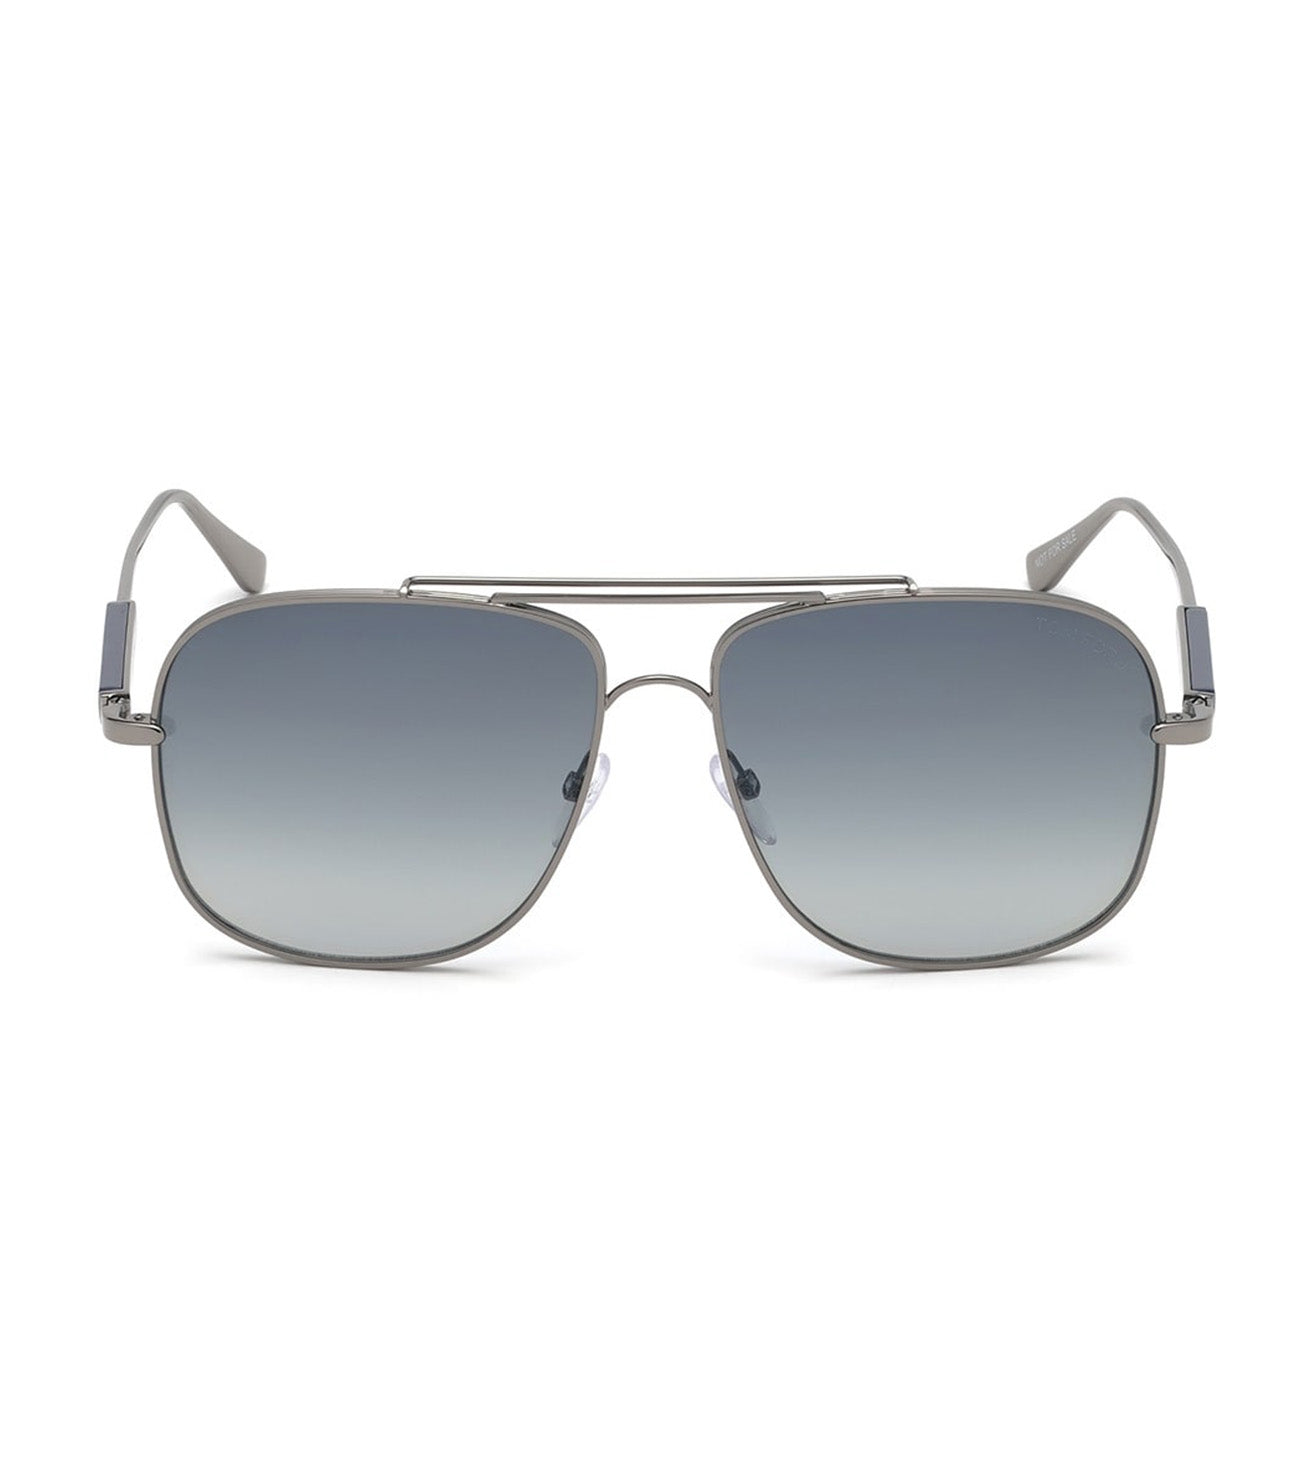 Tom Ford Men's Blue Gradient Aviator Sunglasses